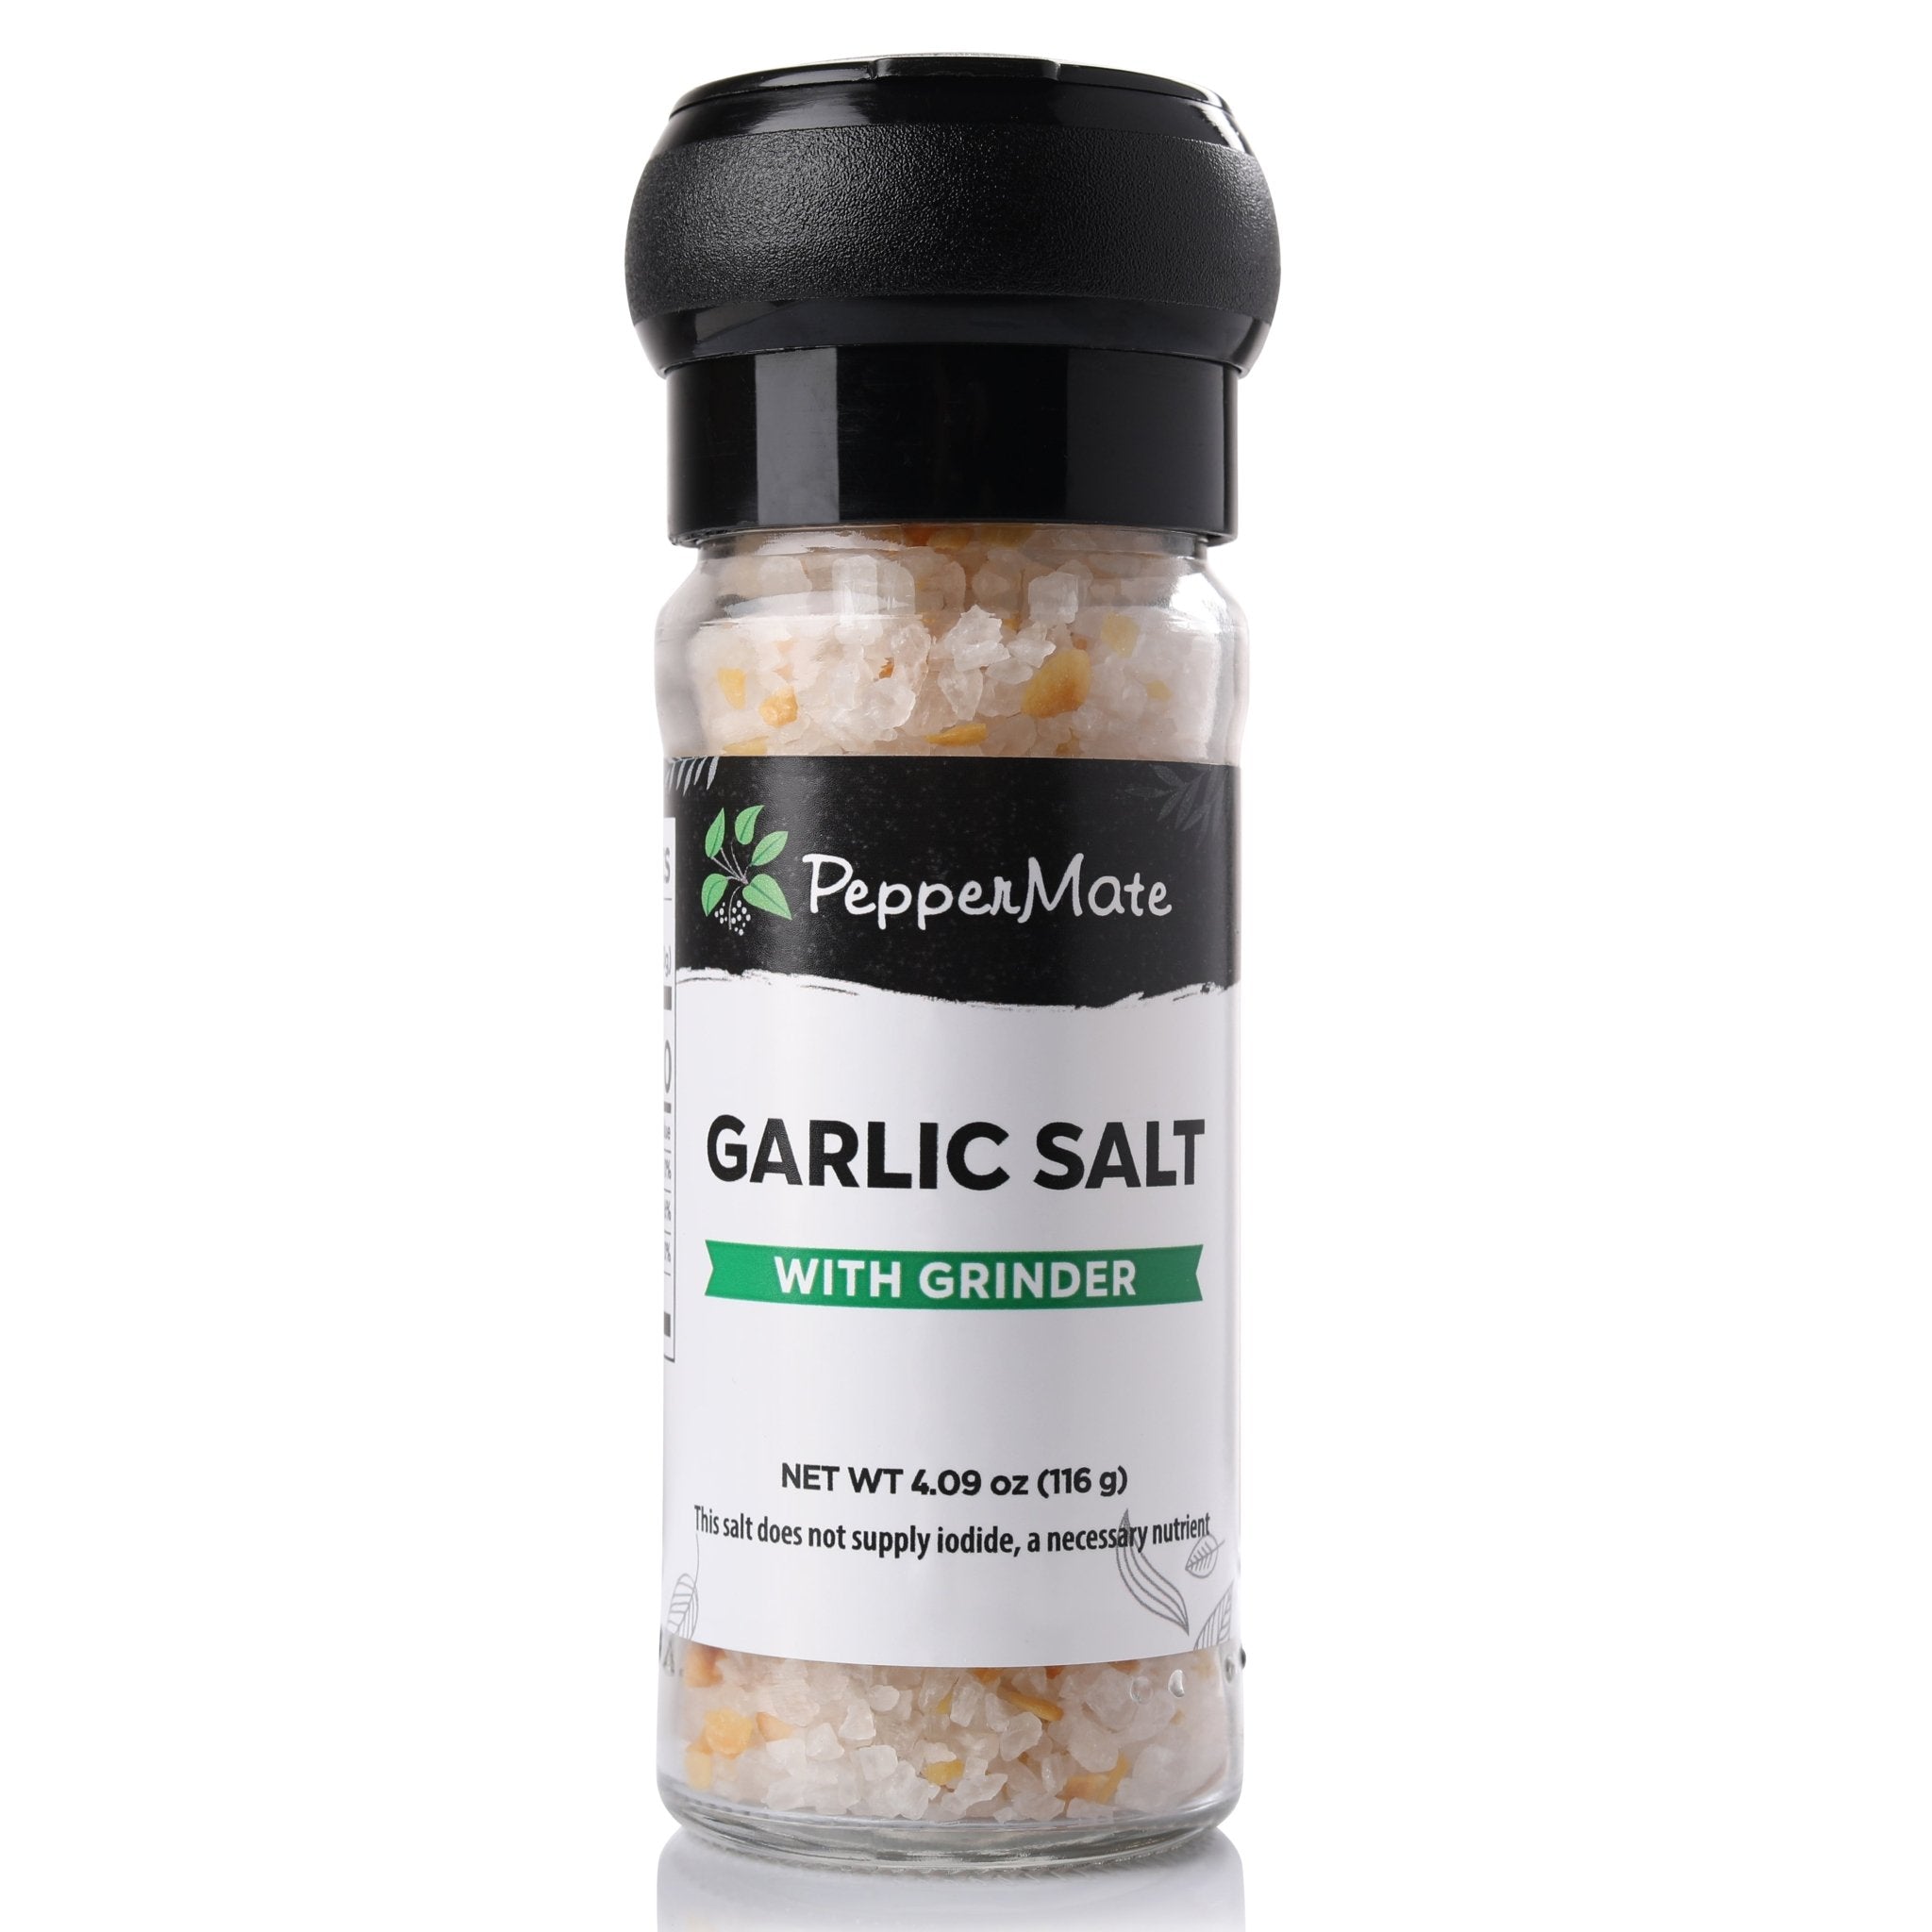 Rechargeable Salt Pepper Grinders: reg. $69.99; SALE $39.99